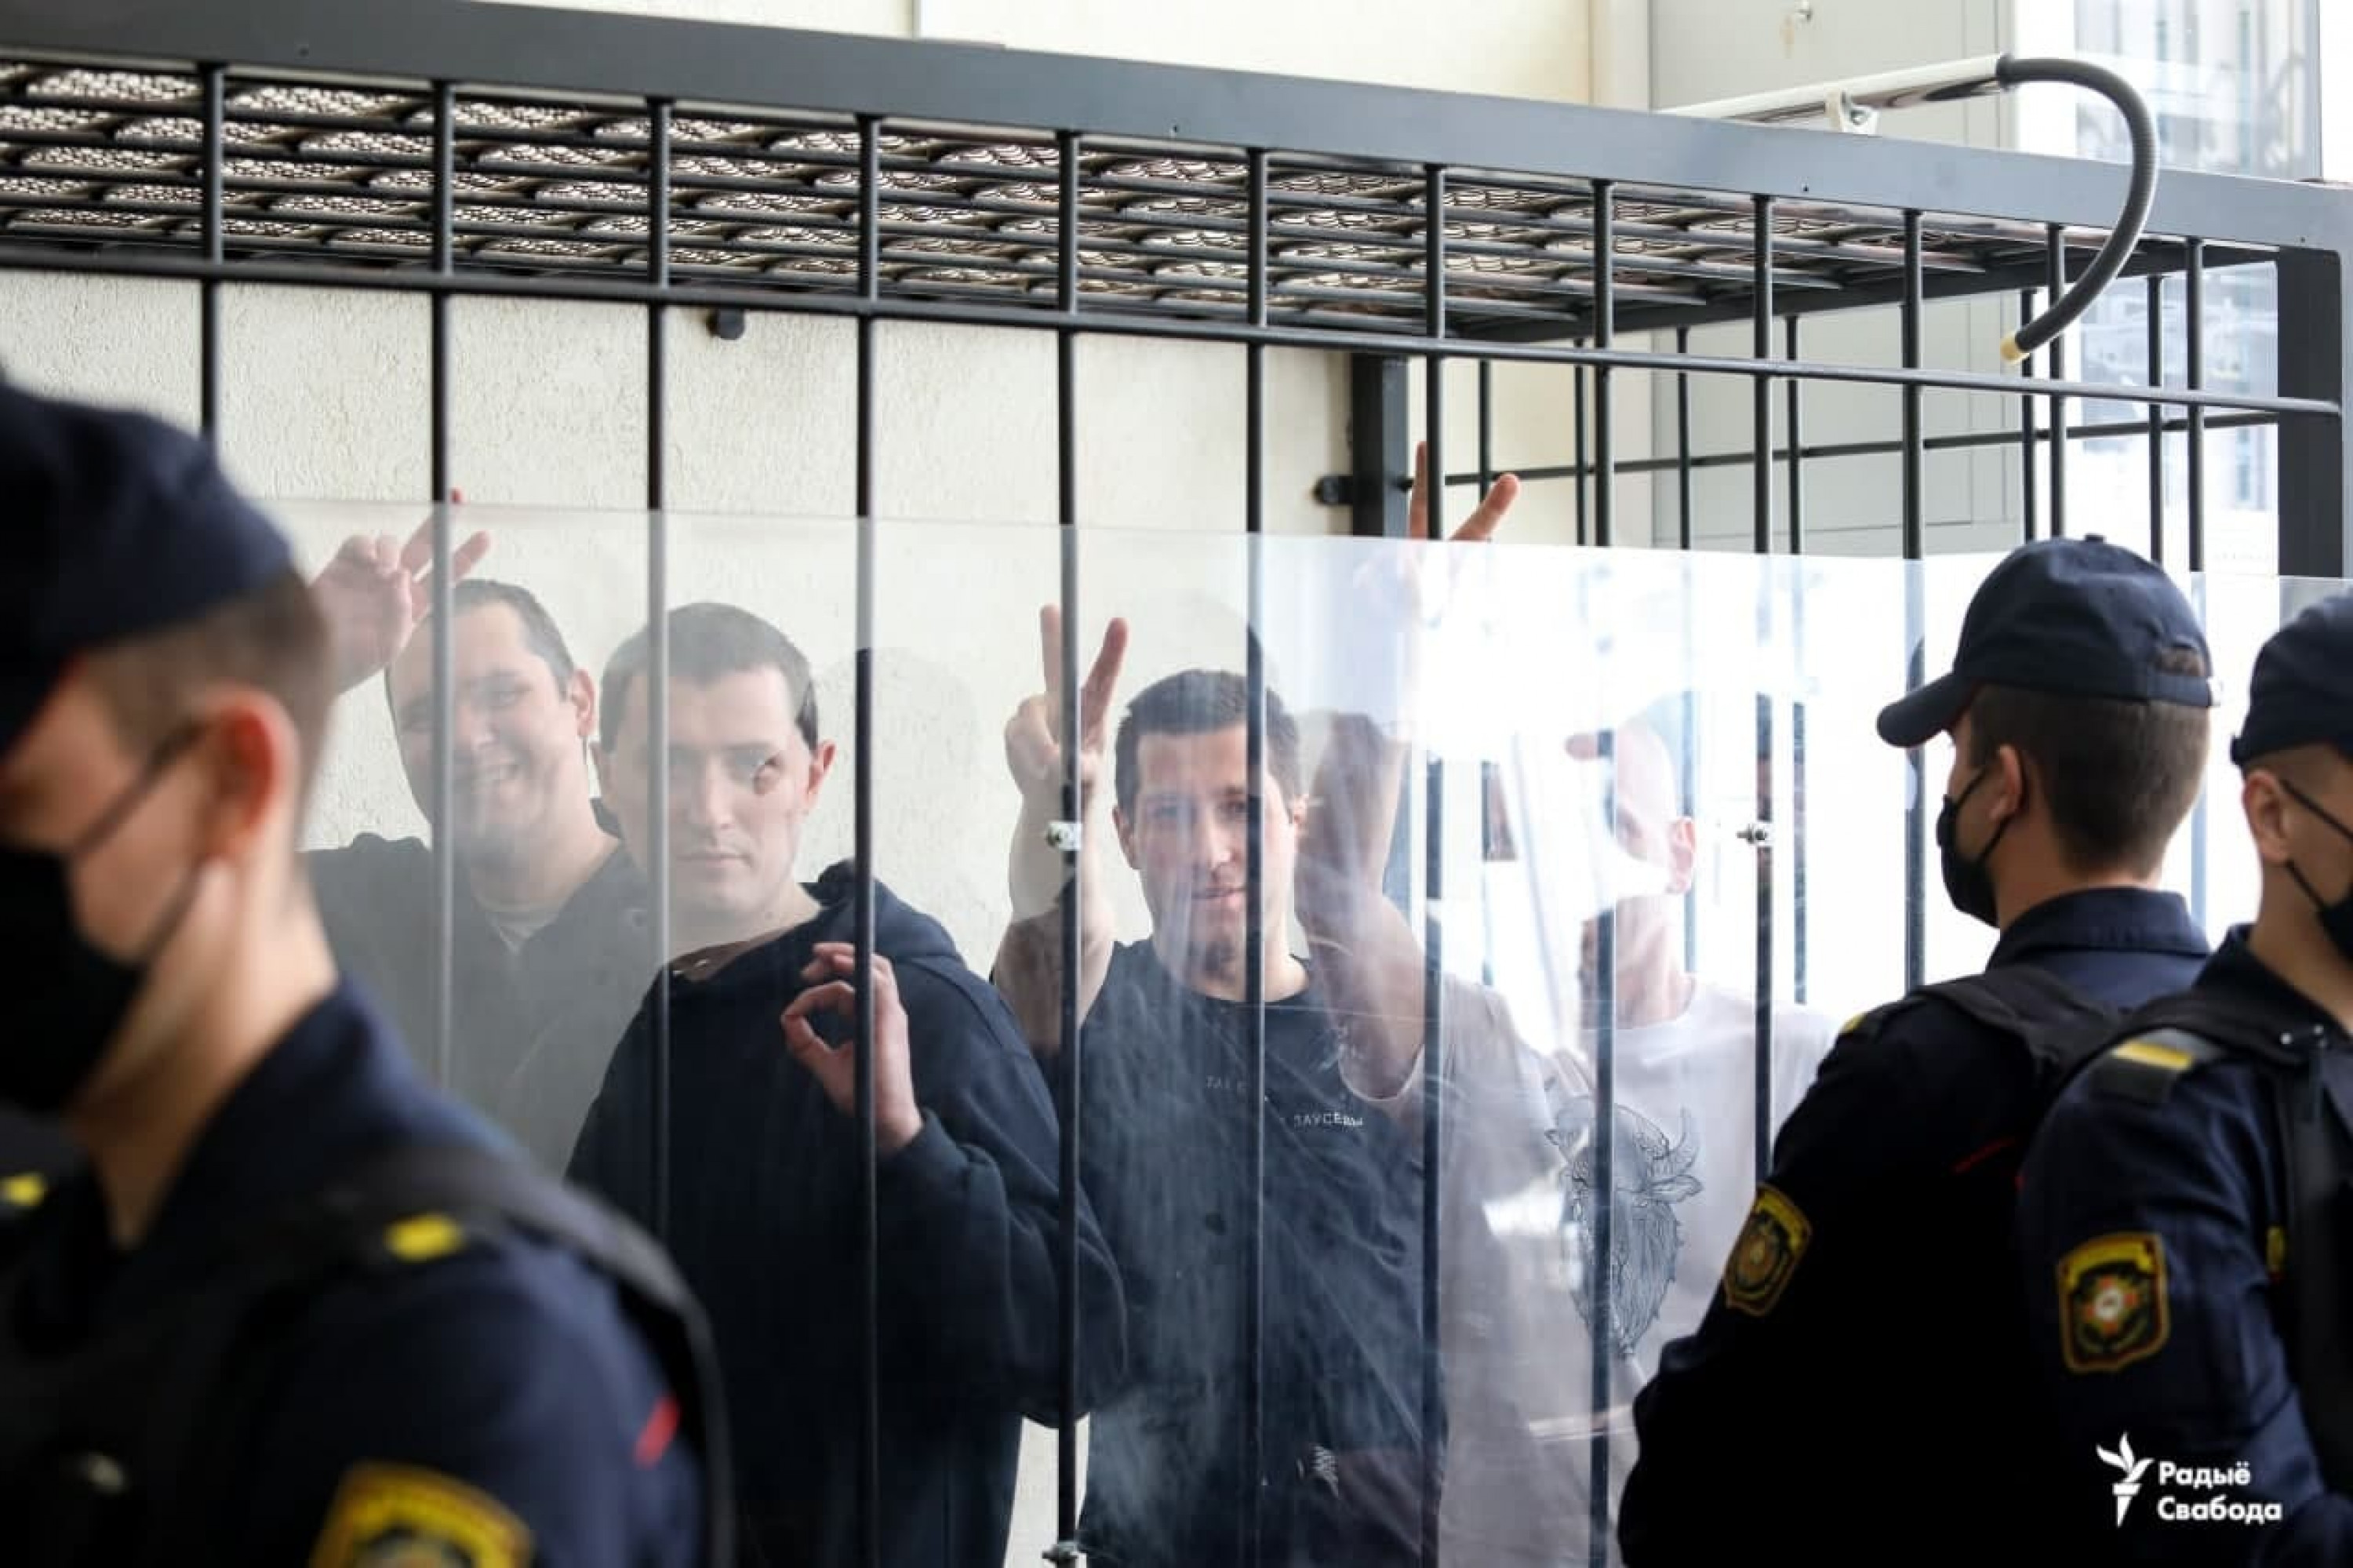 Andrei Voinich, Dzmitry Kazlou, Pavel Yukhnevich and Yauhen Afnahel on trial. Photo: svaboda.org